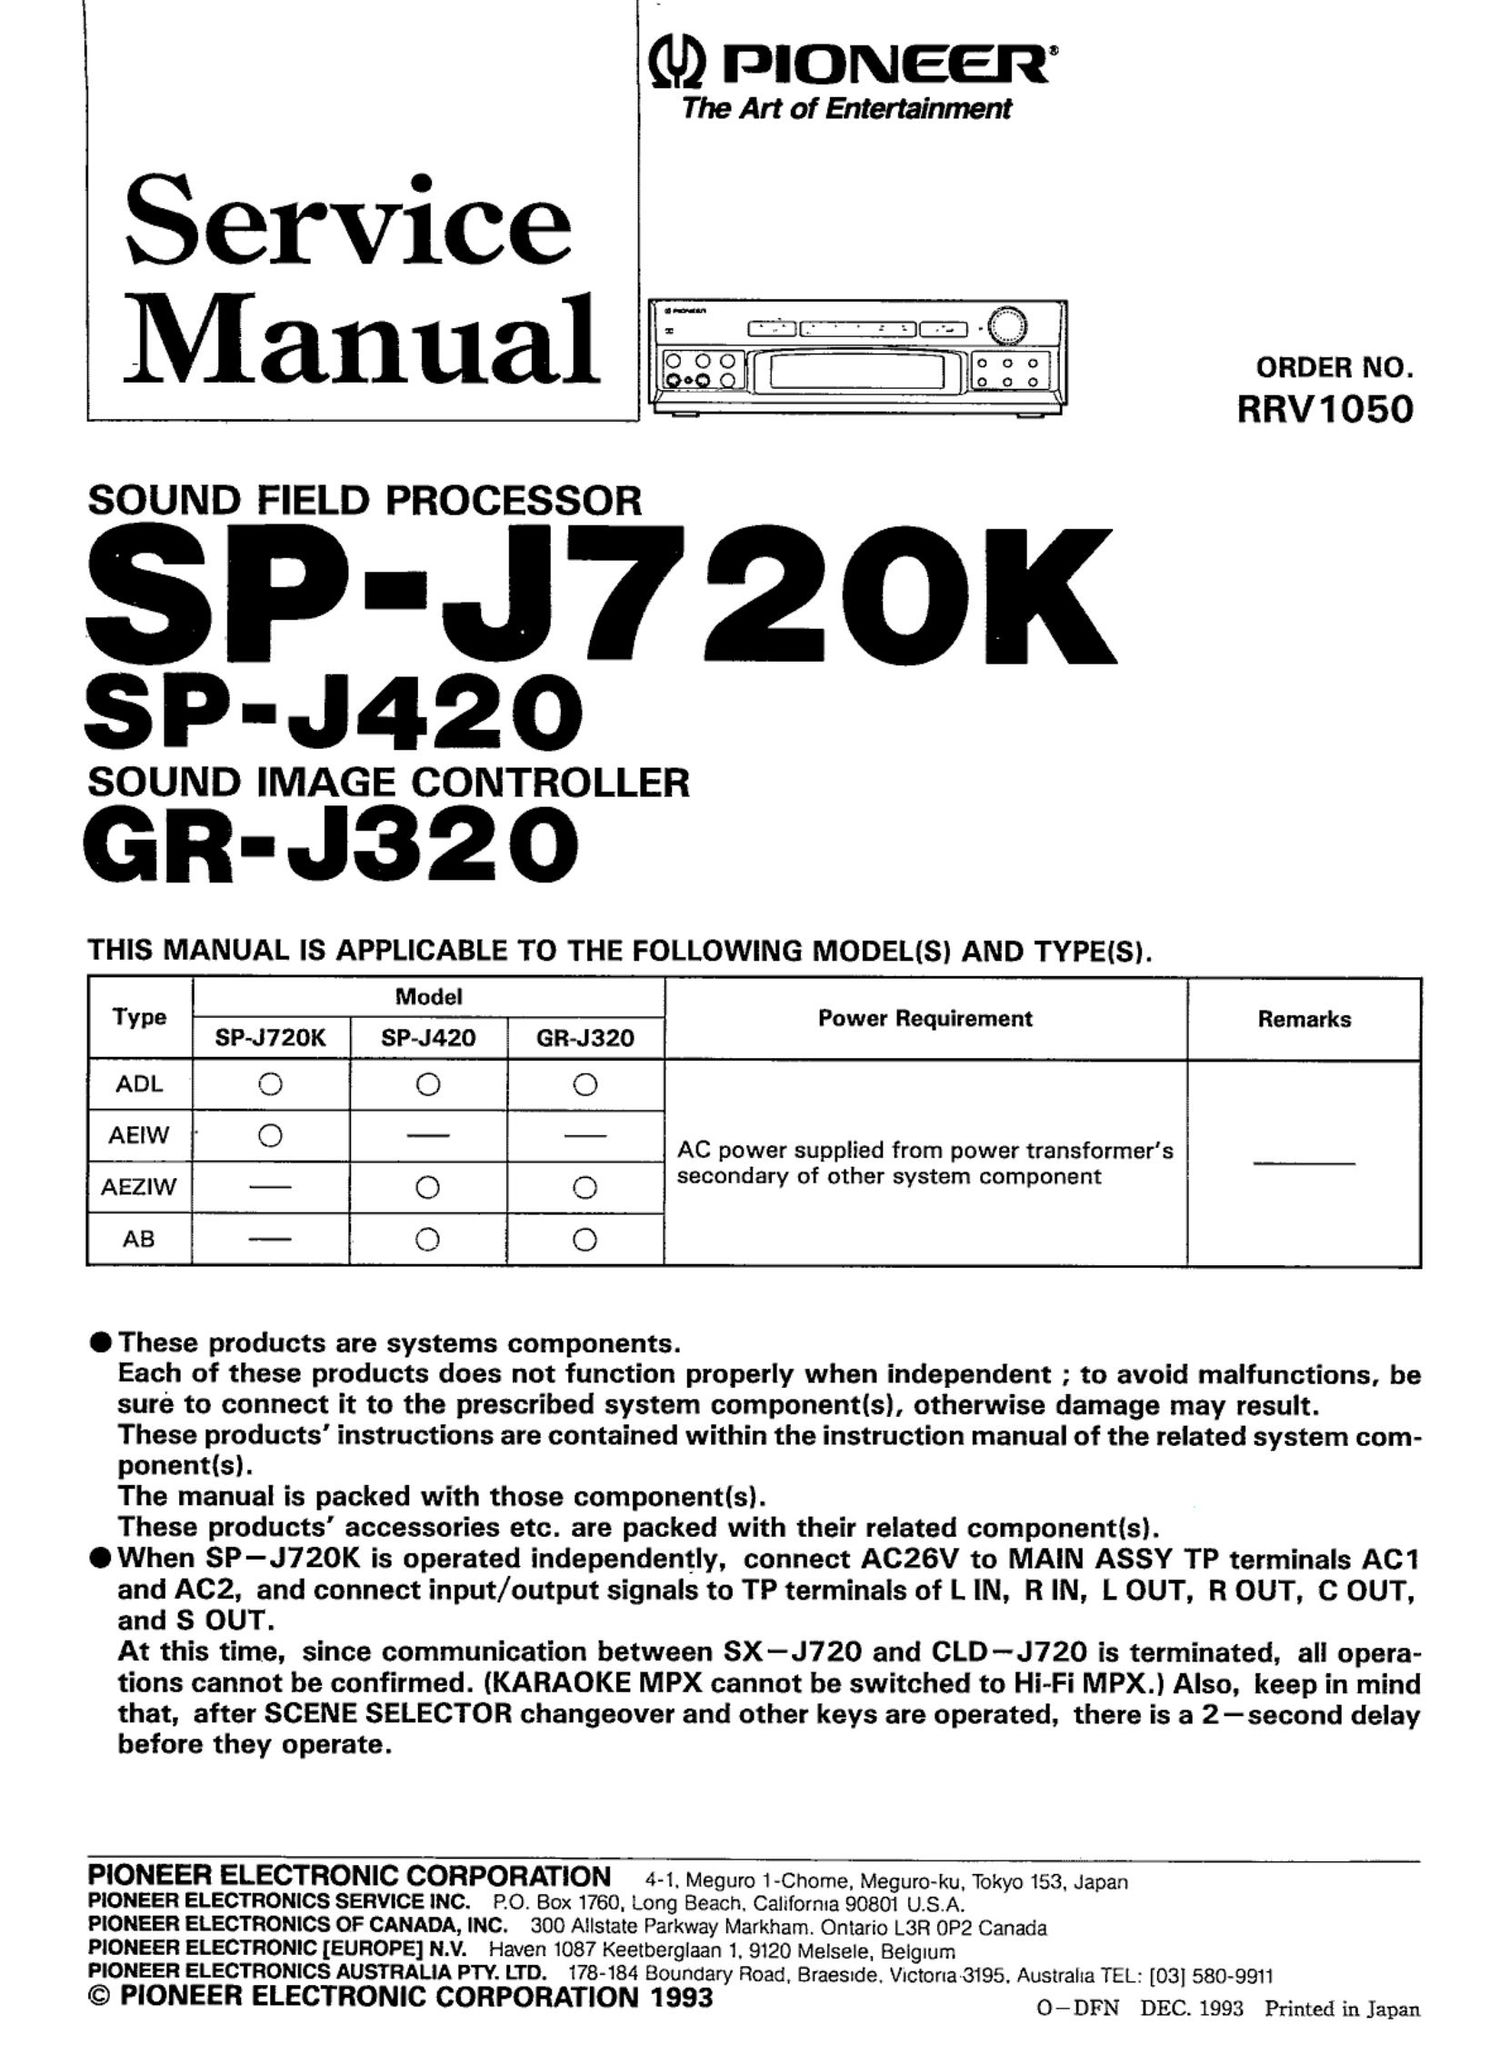 pioneer spj 420 k service manual